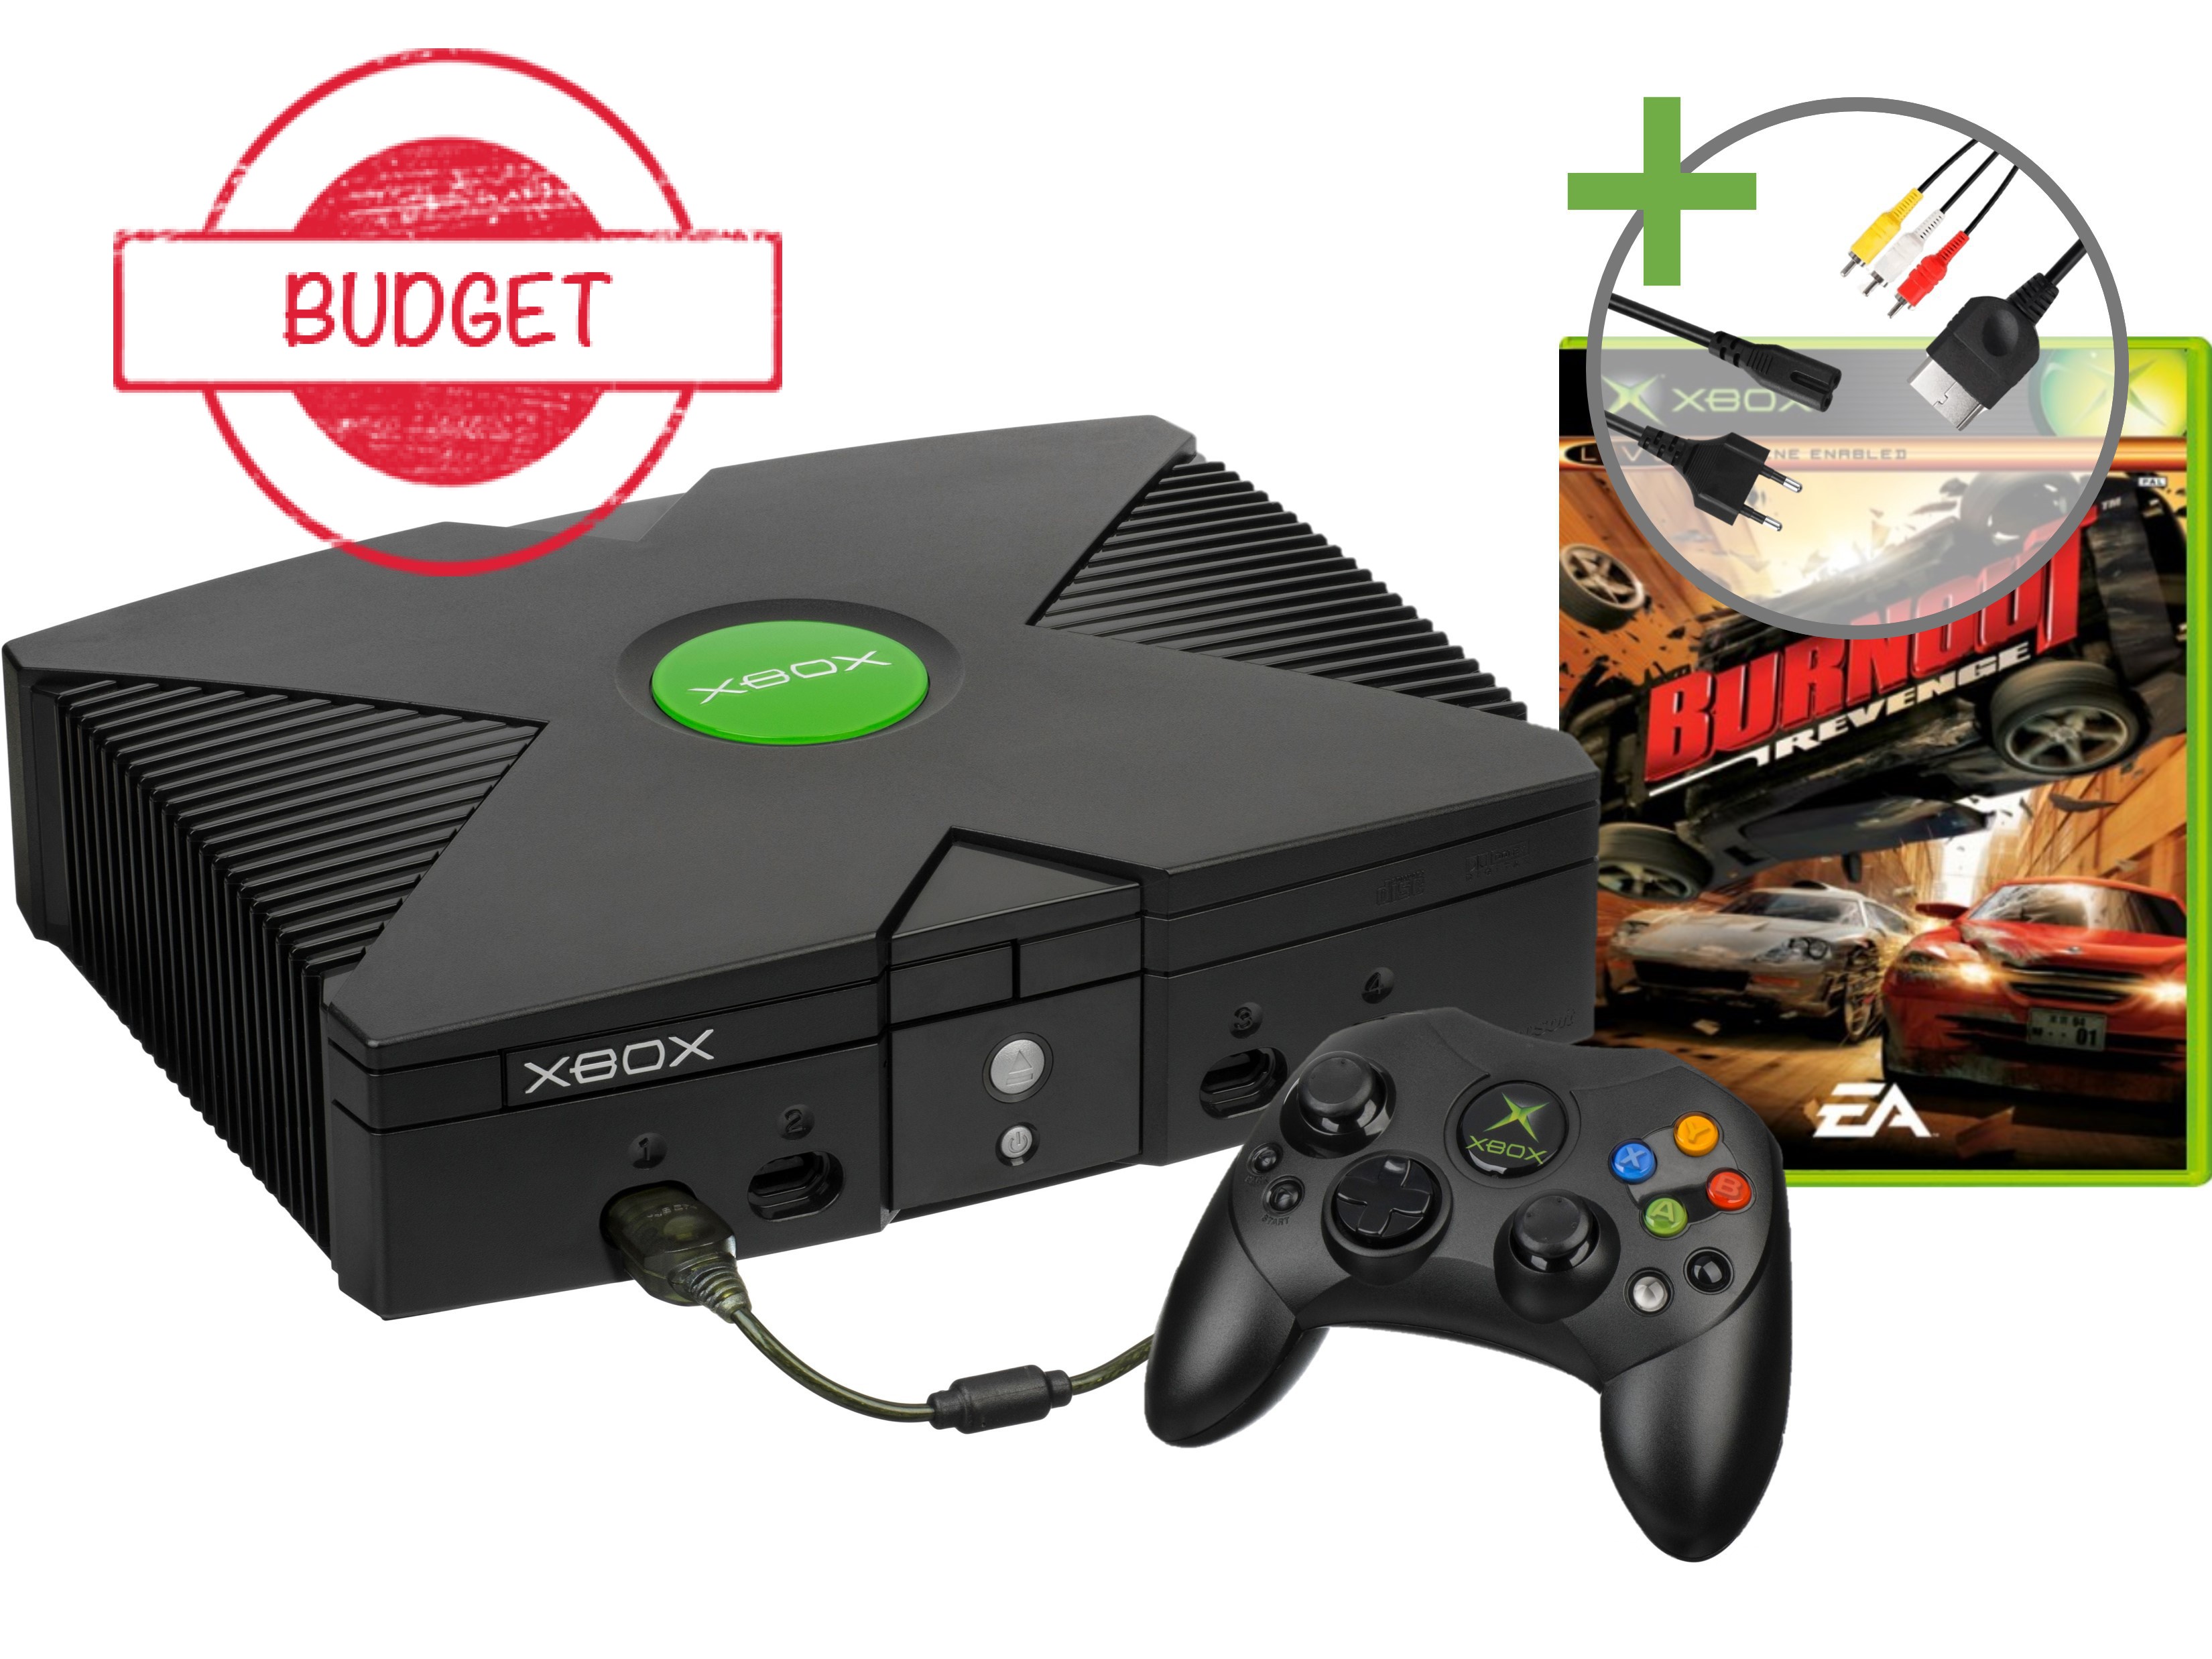 Microsoft Xbox Classic Starter Pack - Burnout 3 Edition - Budget - Xbox Original Hardware